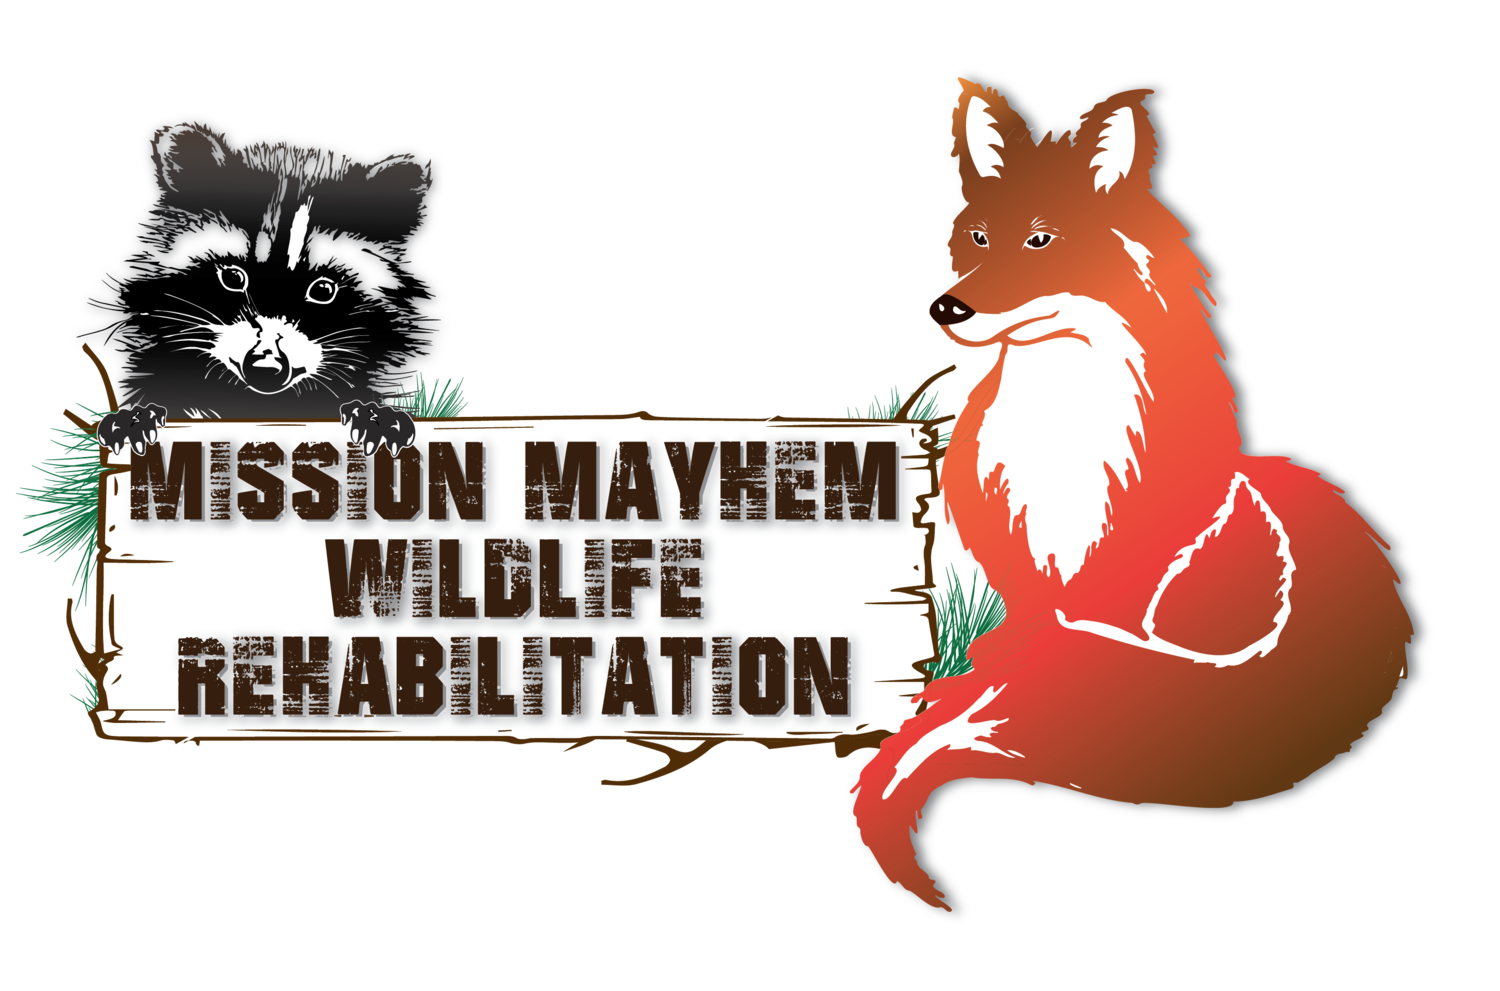 Mission Mayhem Wildlife Rehab